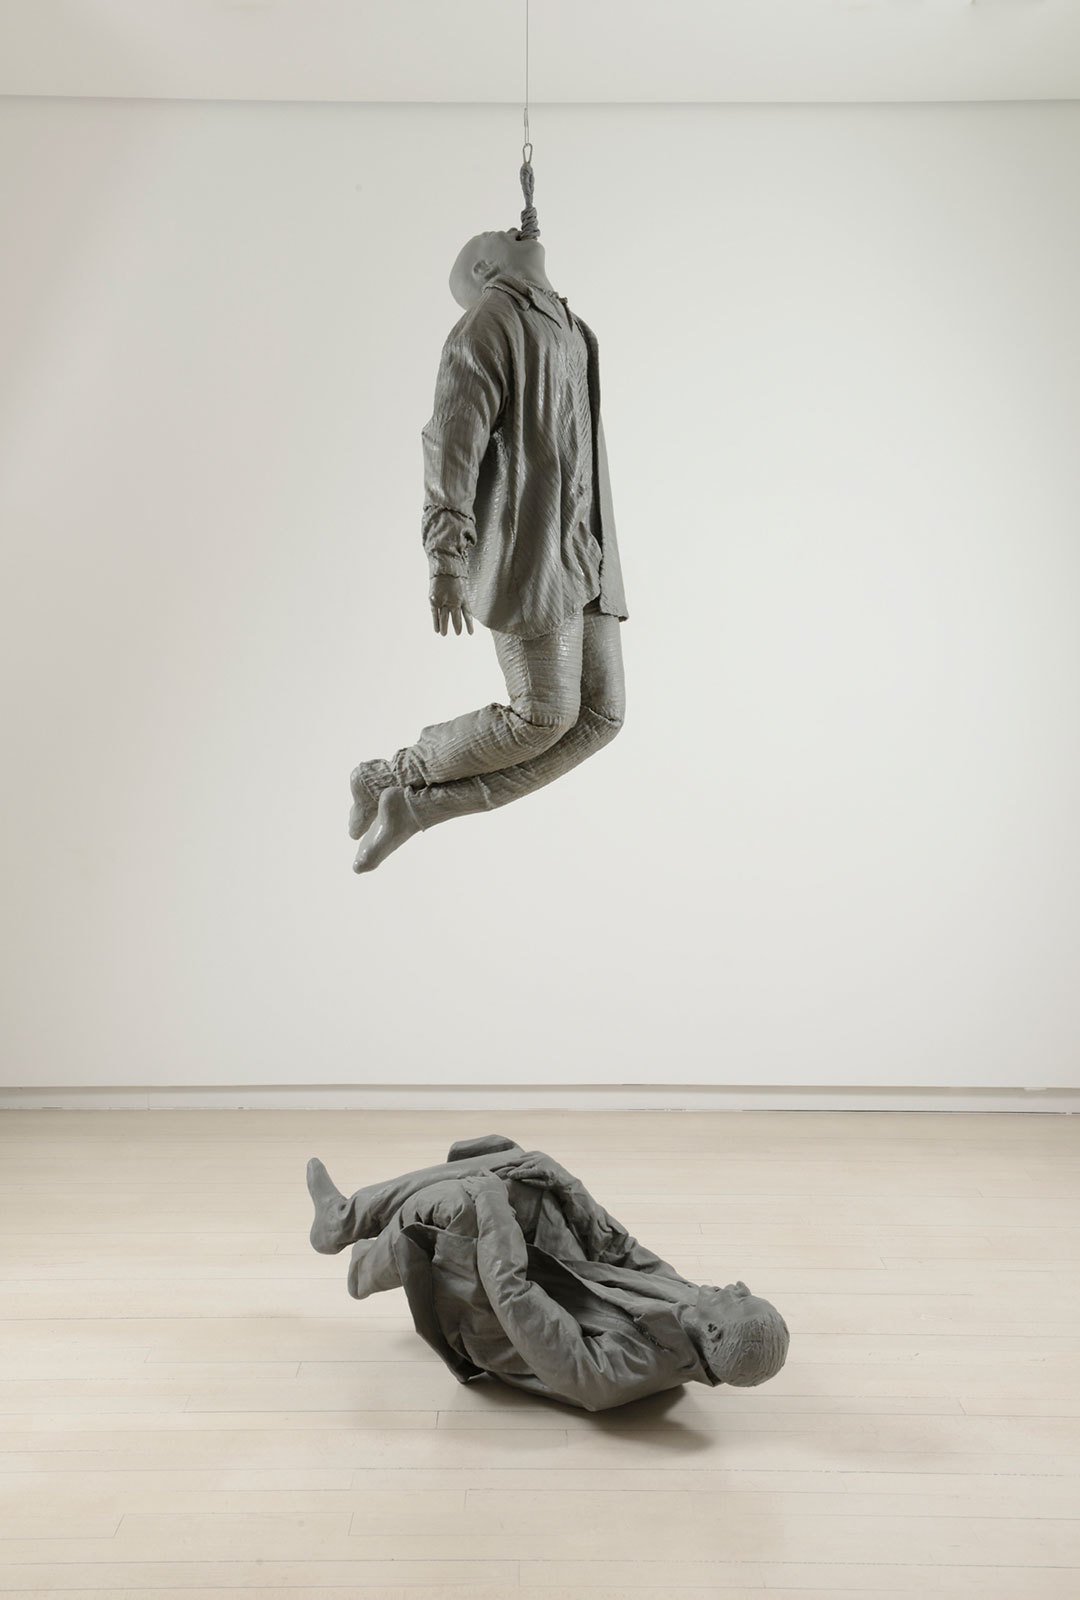 Хуан Муньос. Two figures one laughing at one hanging. 2000&copy; Galer&iacute;a Elvira Gonz&aacute;lez